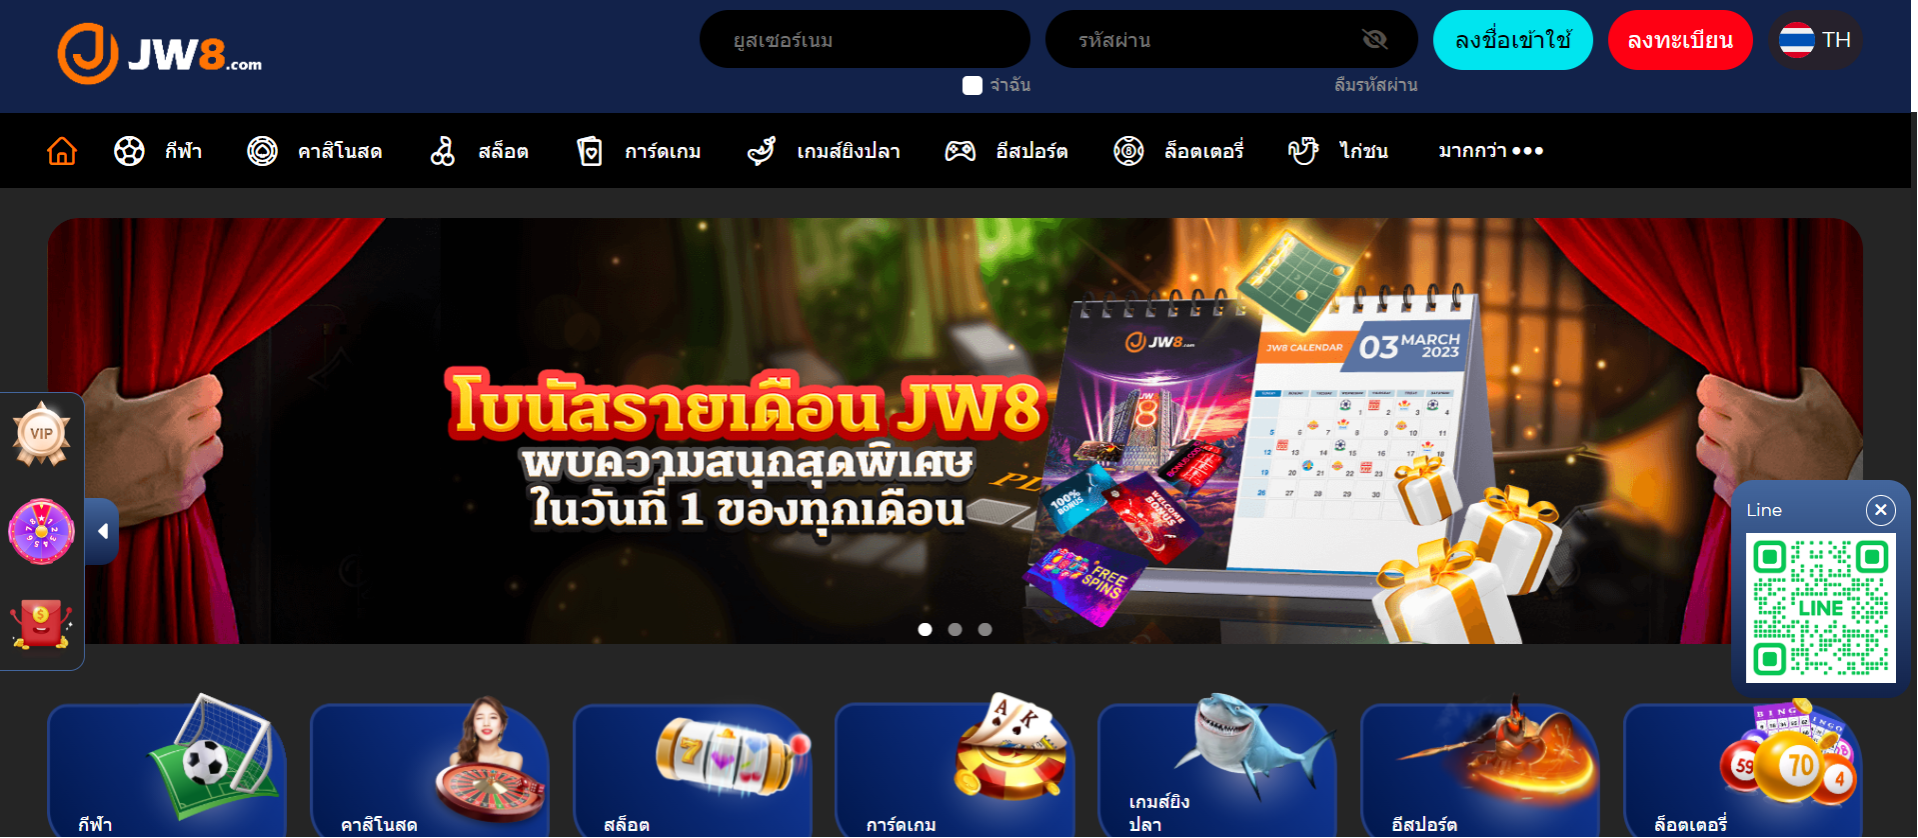 AJMBET JW8 แทงบอล บาคาร่า เว็บใหญ่ อันดับต้นๆ ในประเทศไทย